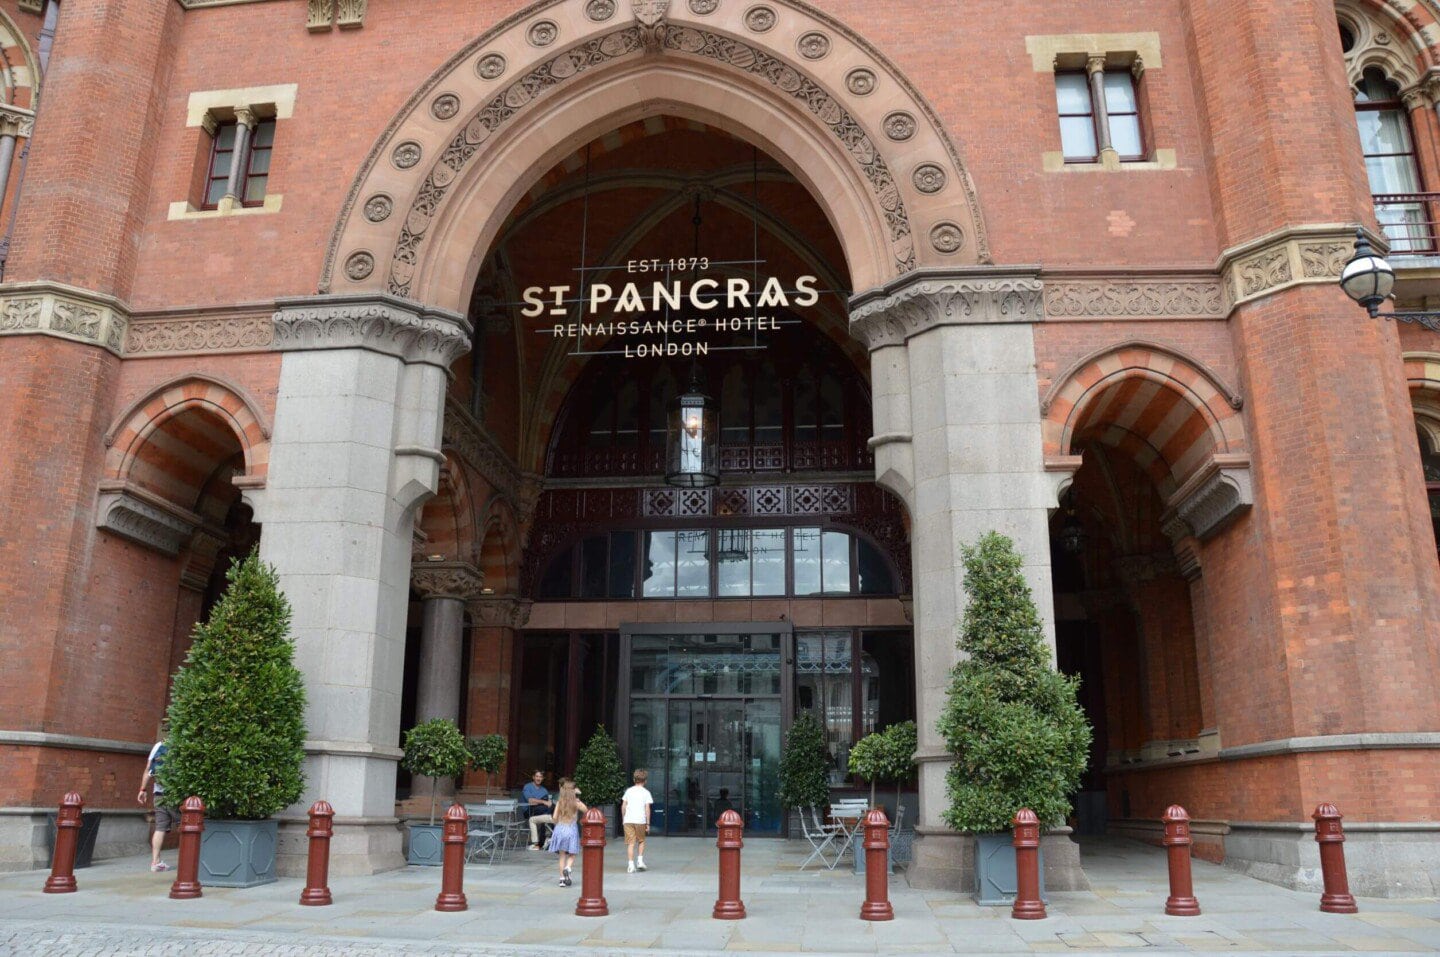 The entrance to the St Pancras Renaissance Hotel